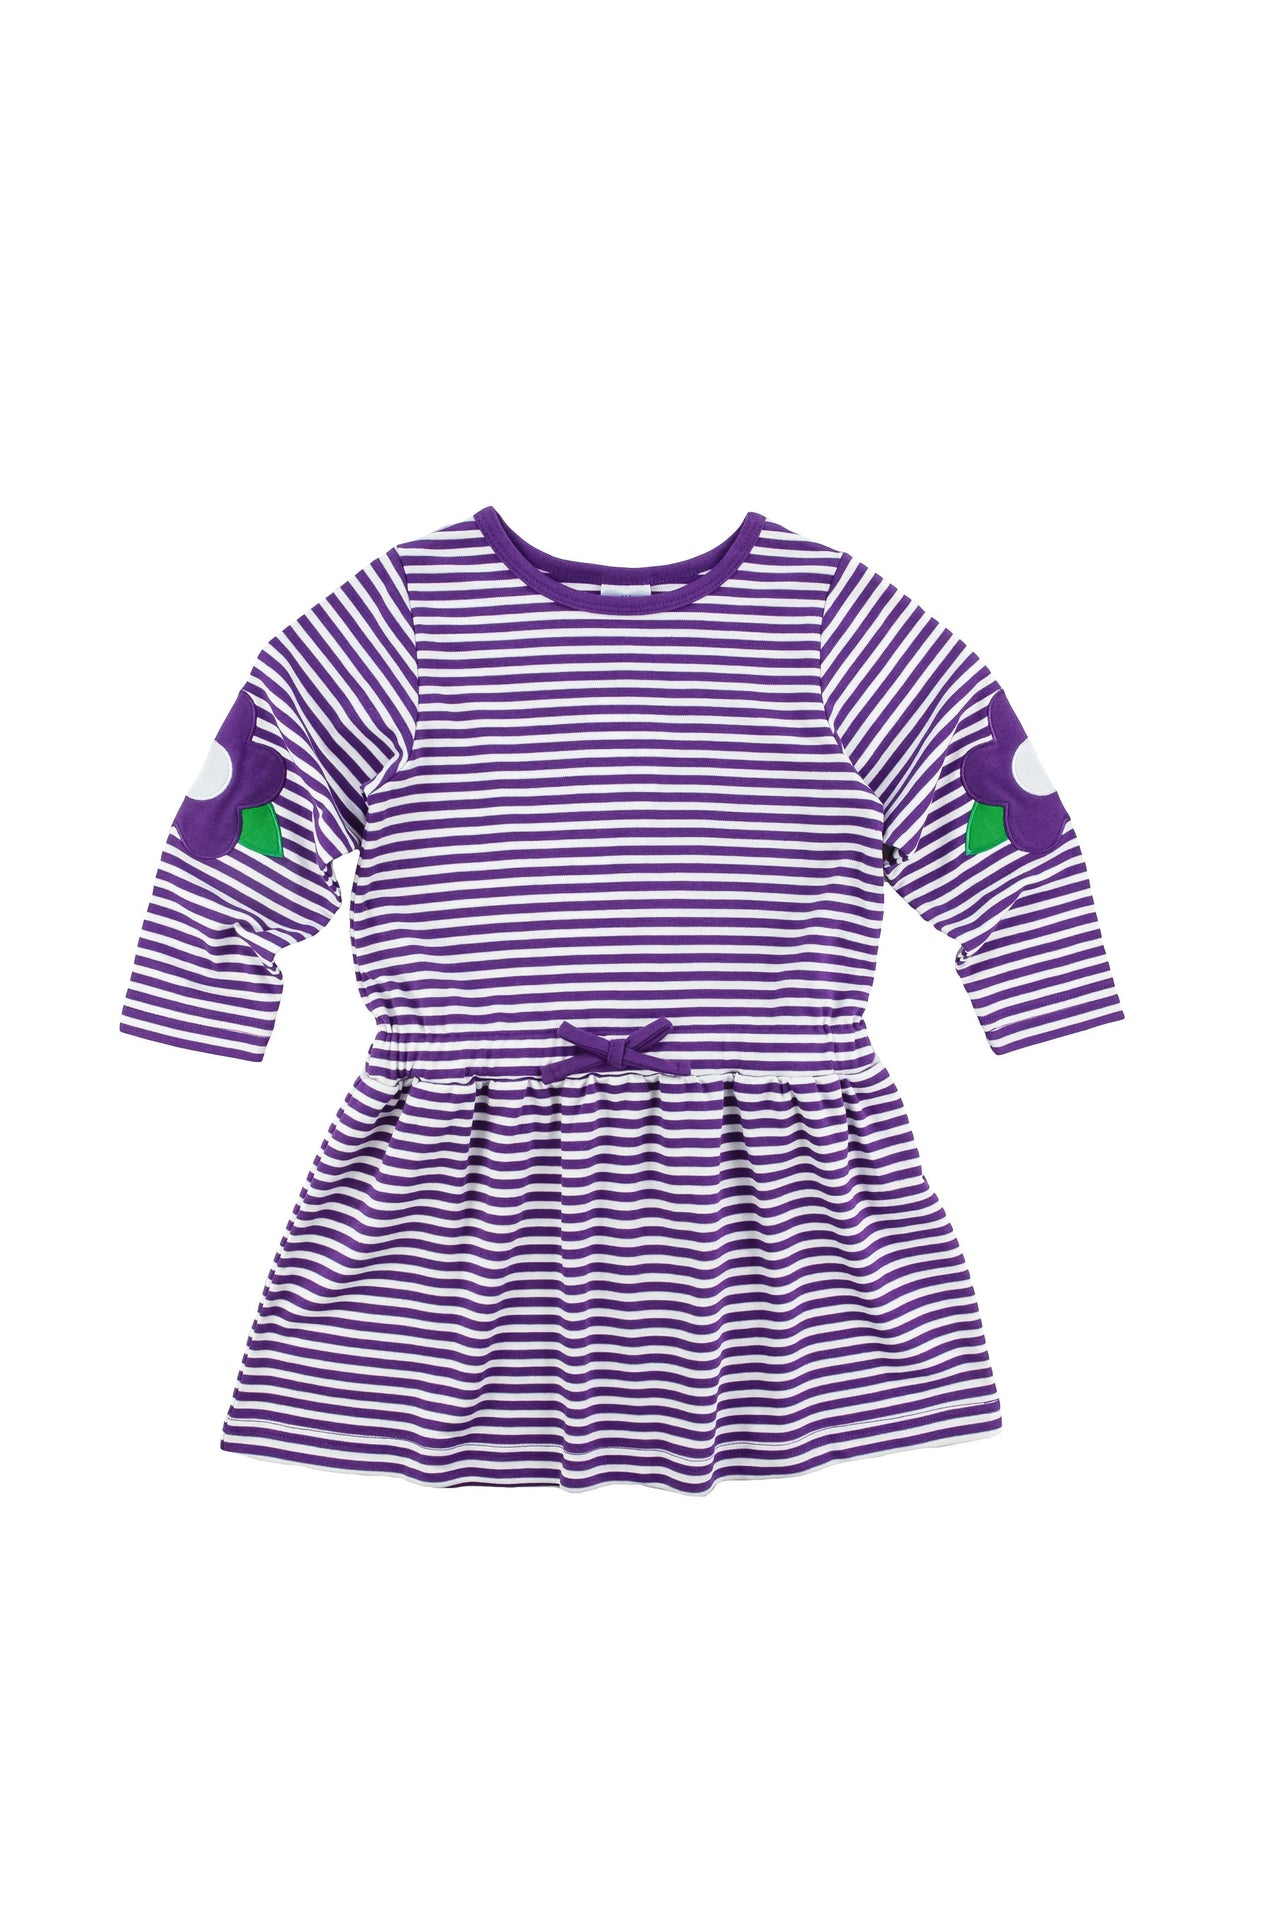 Florence Eiseman Purple/White Stripe Knit Dress W/Flowers F4914 5006